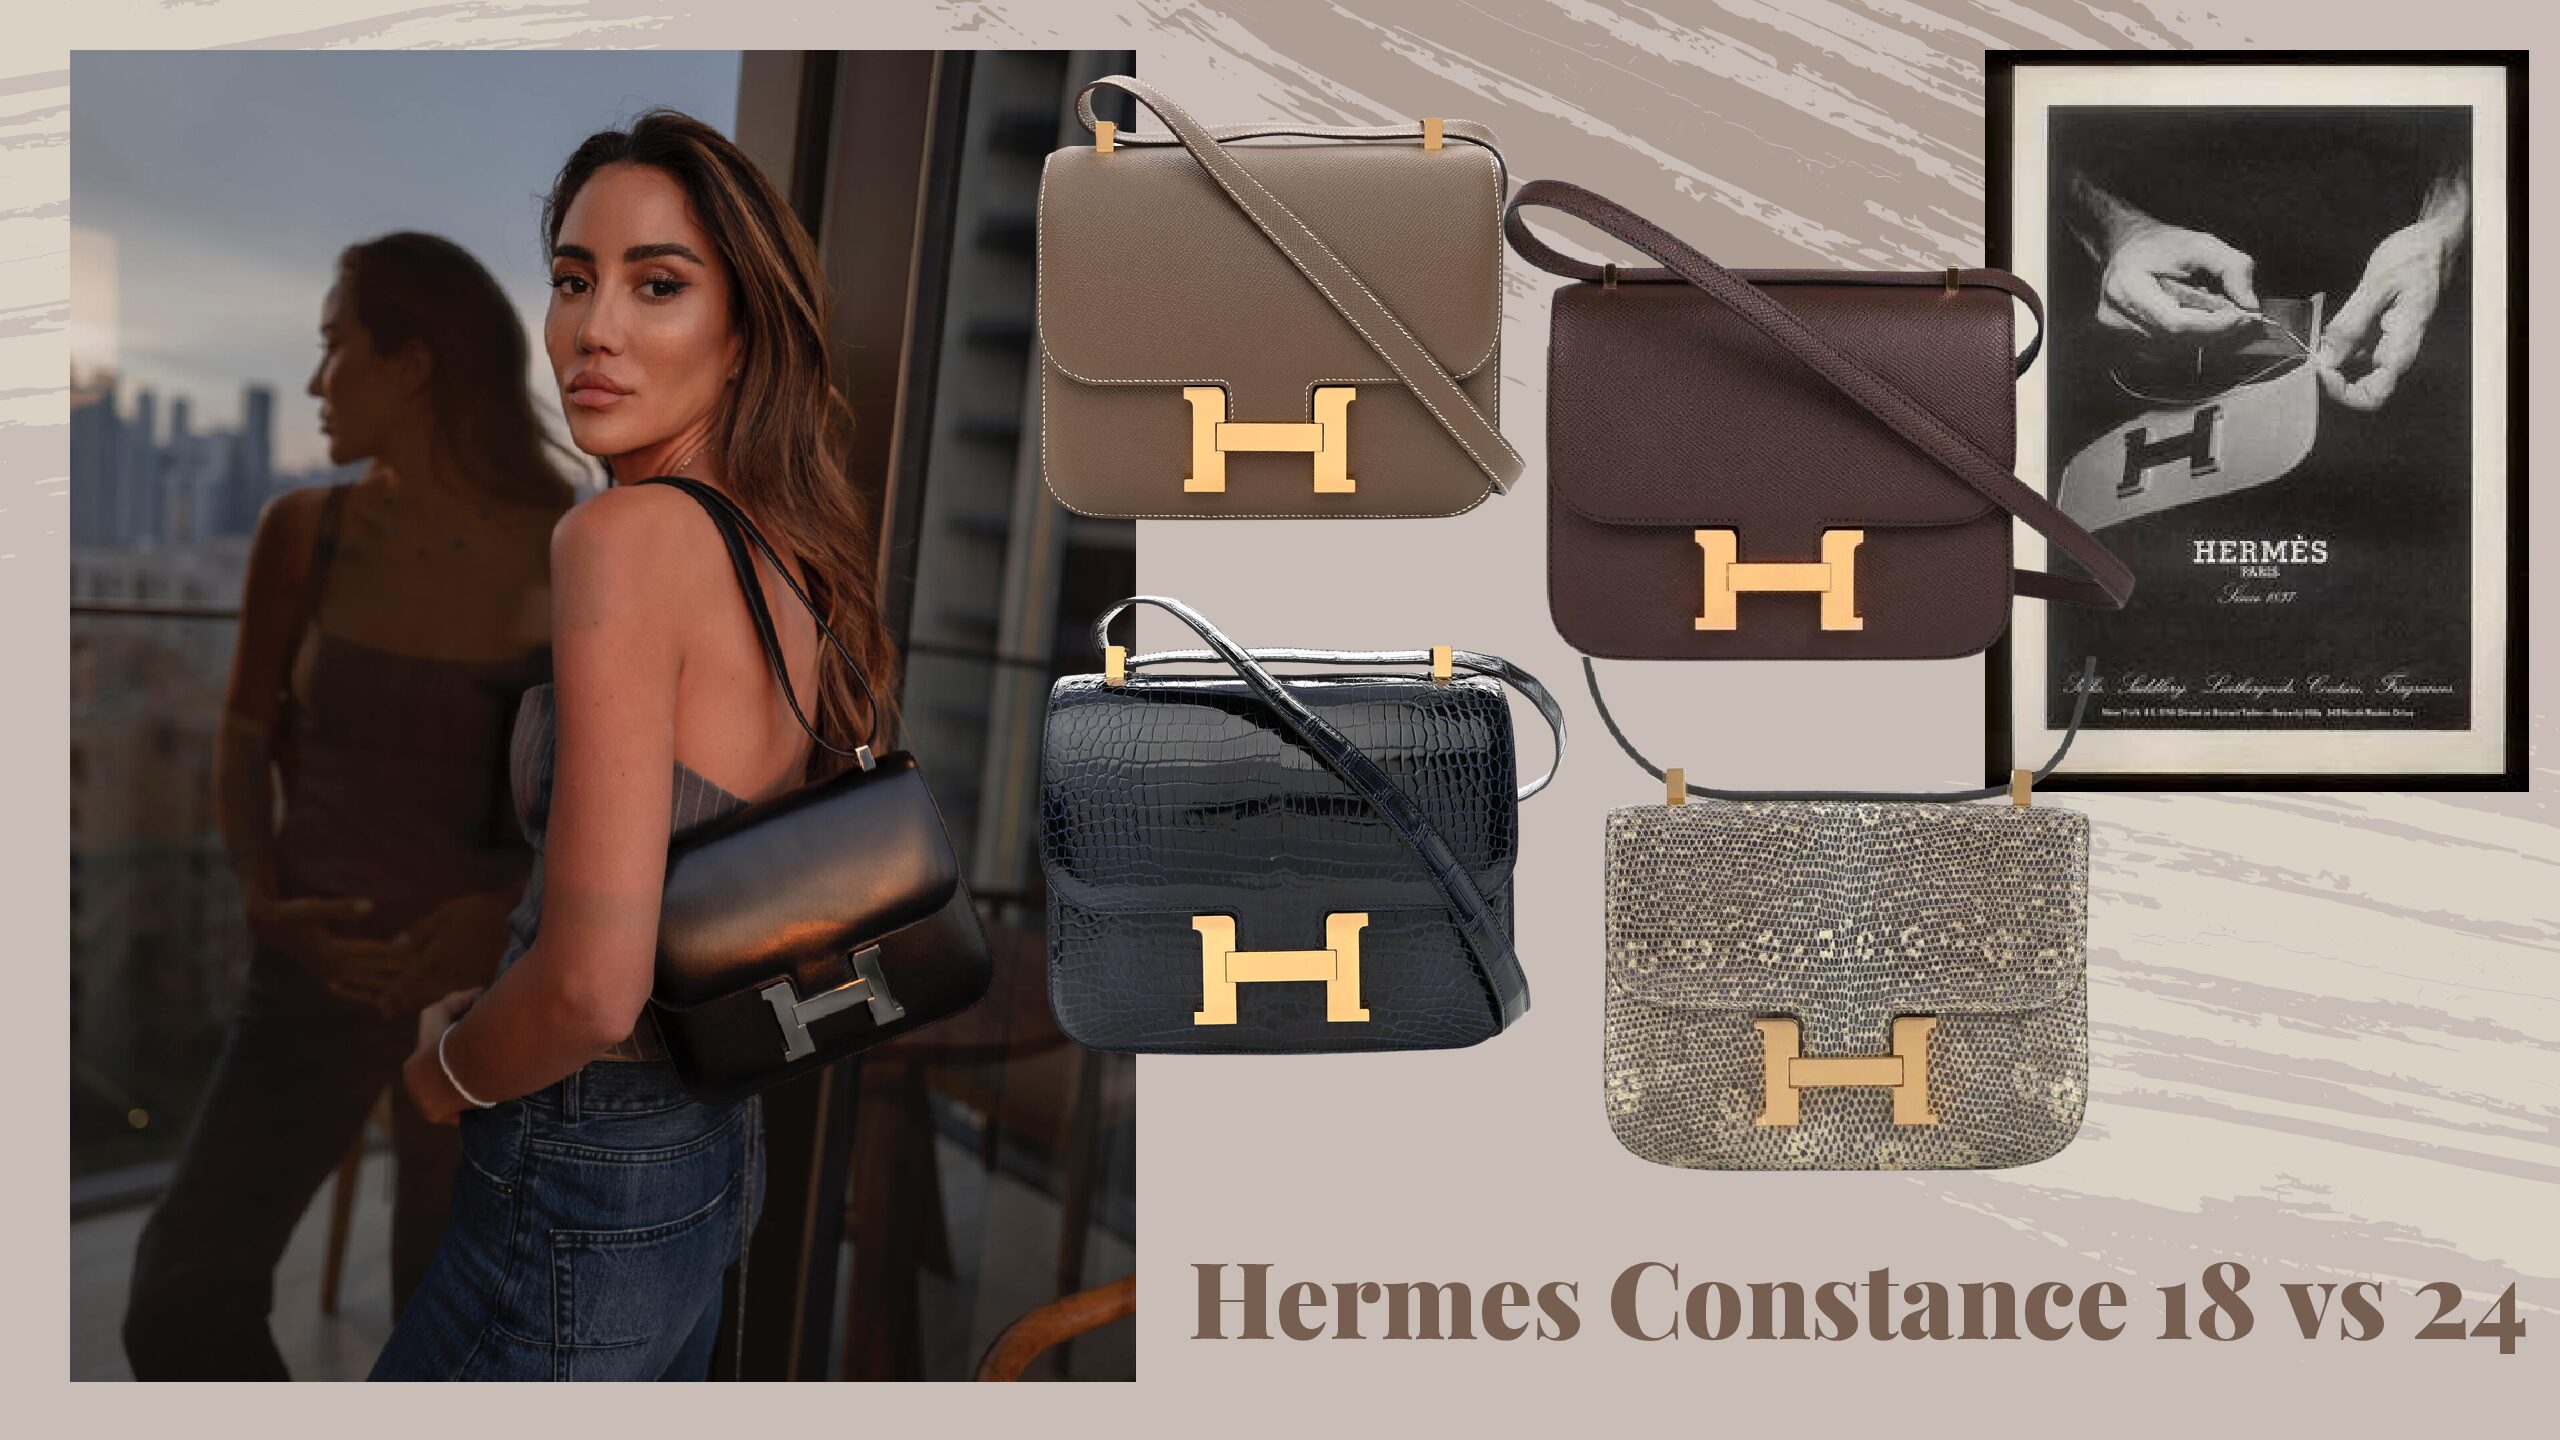 Hermes Constance Bag - A Short Overview